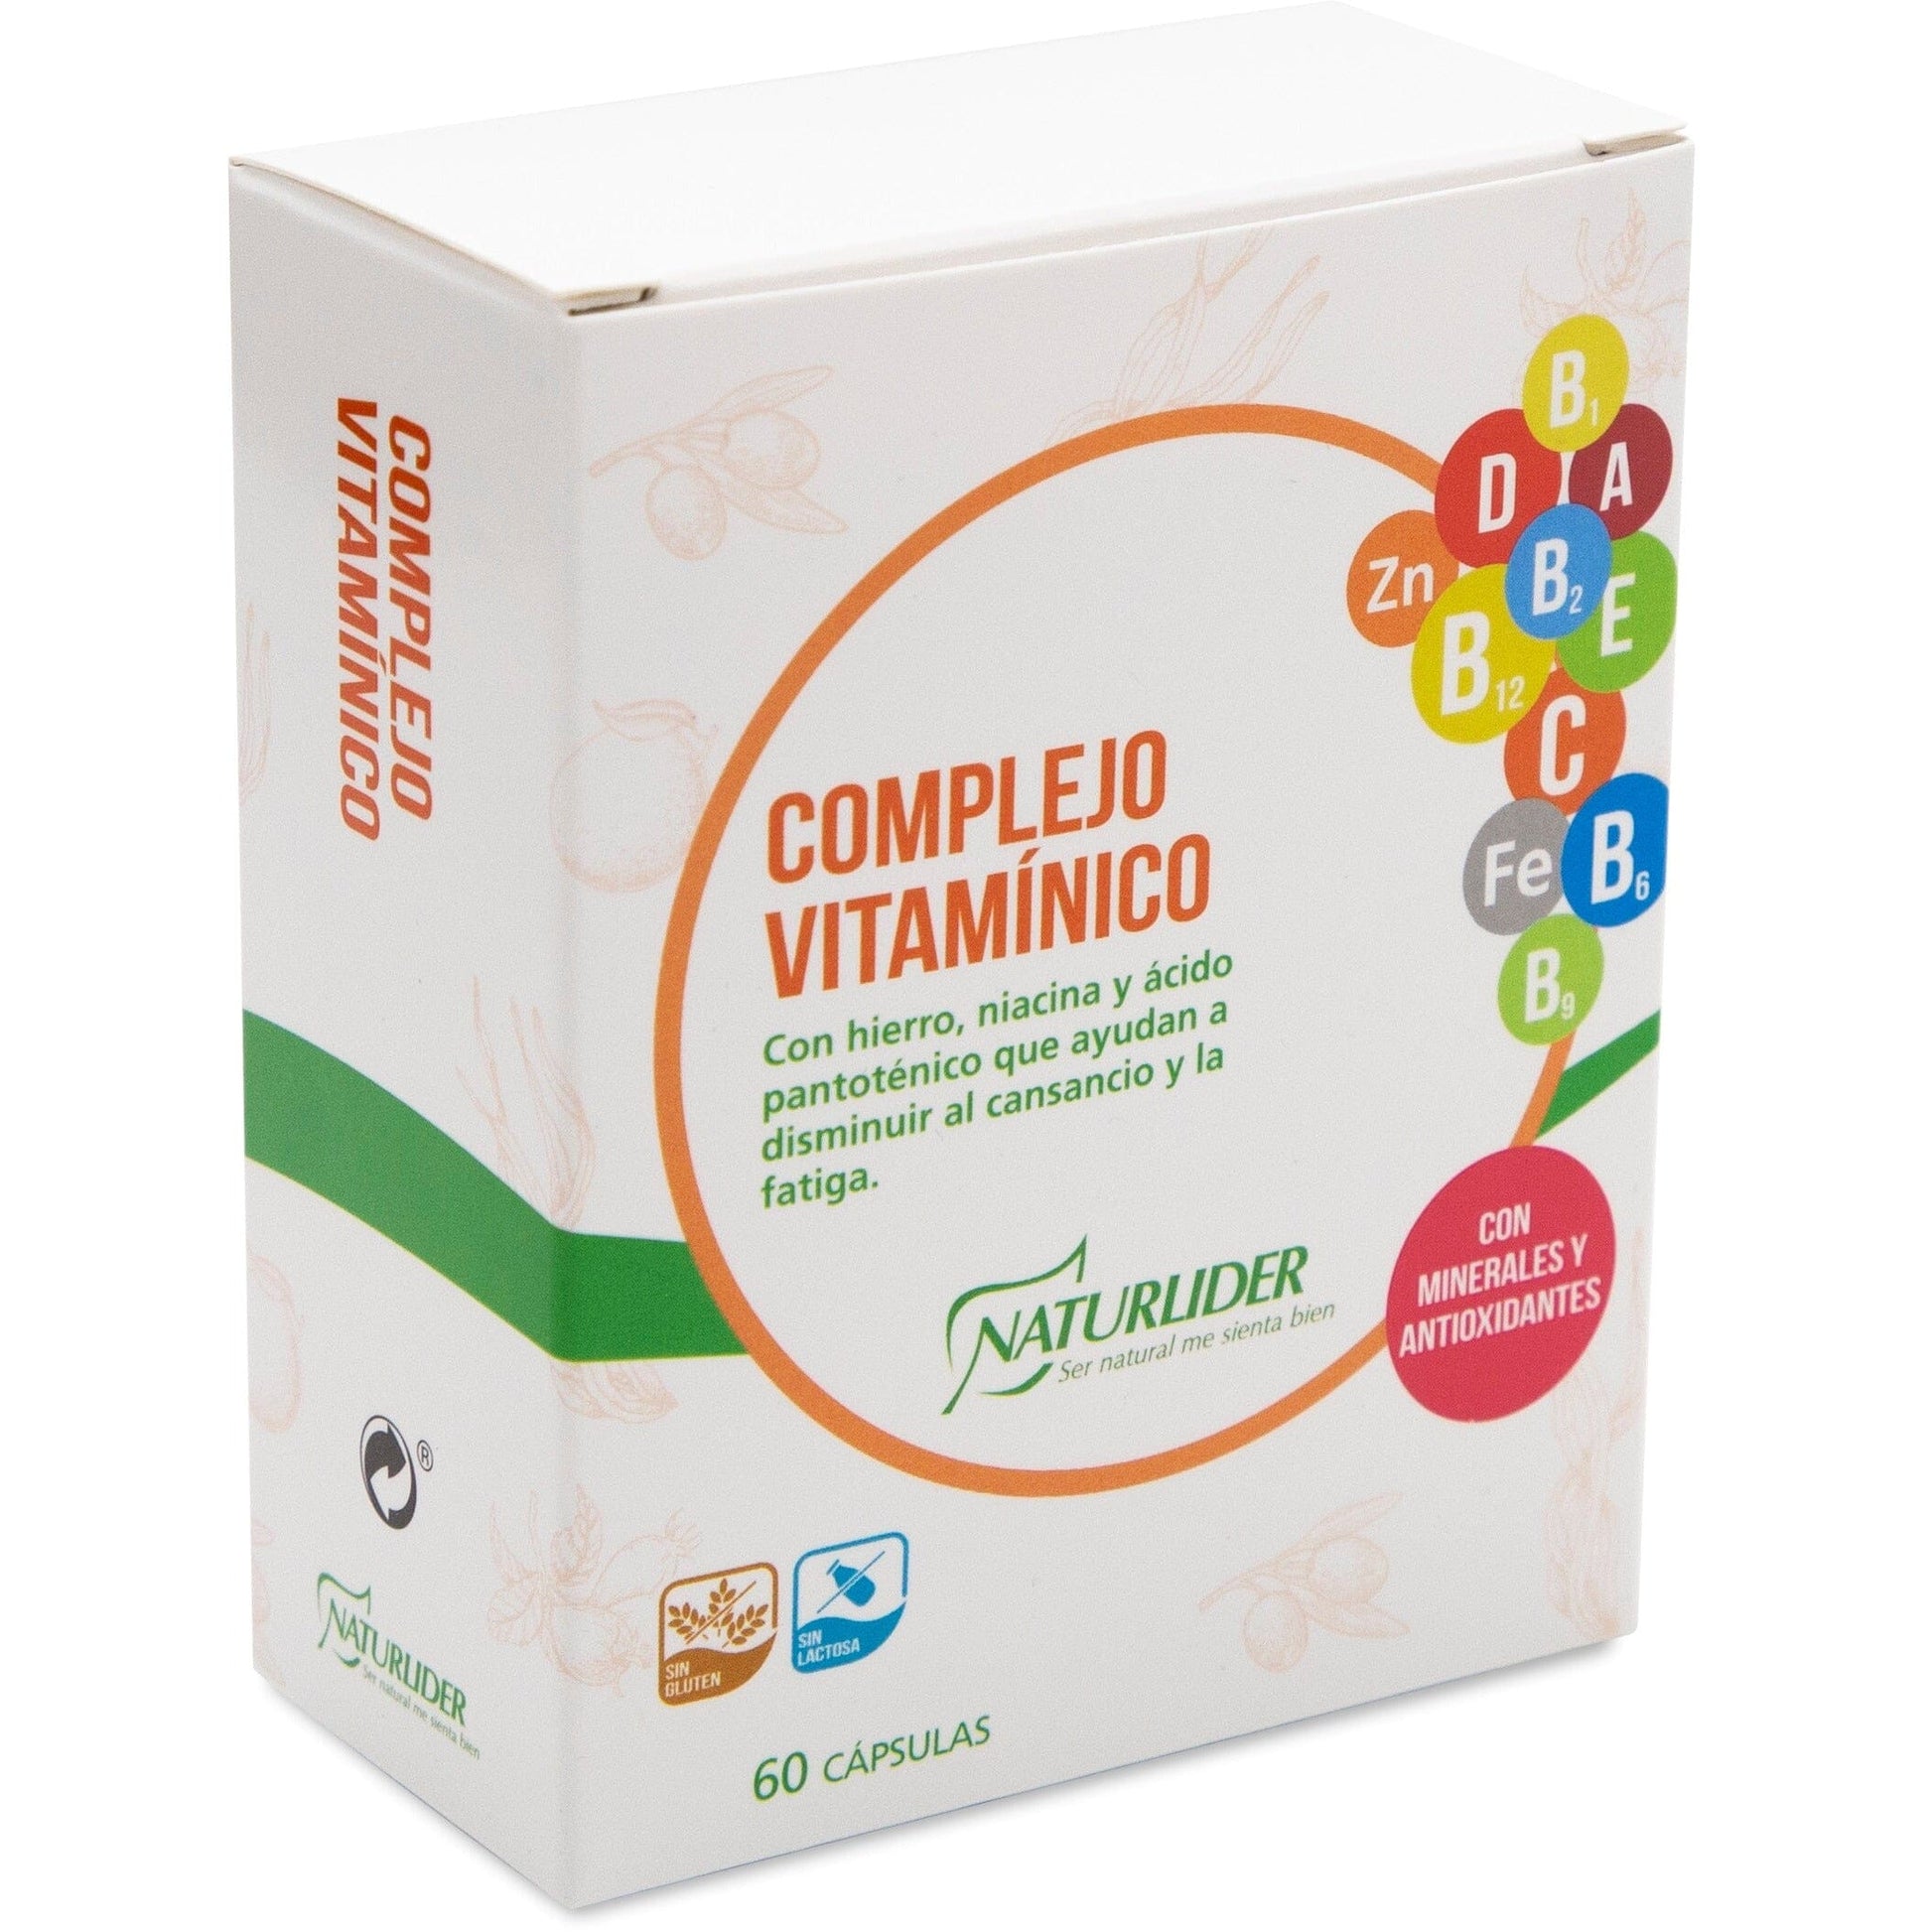 Complejo Vitamínico 60 cápsulas | Naturlider - Dietetica Ferrer